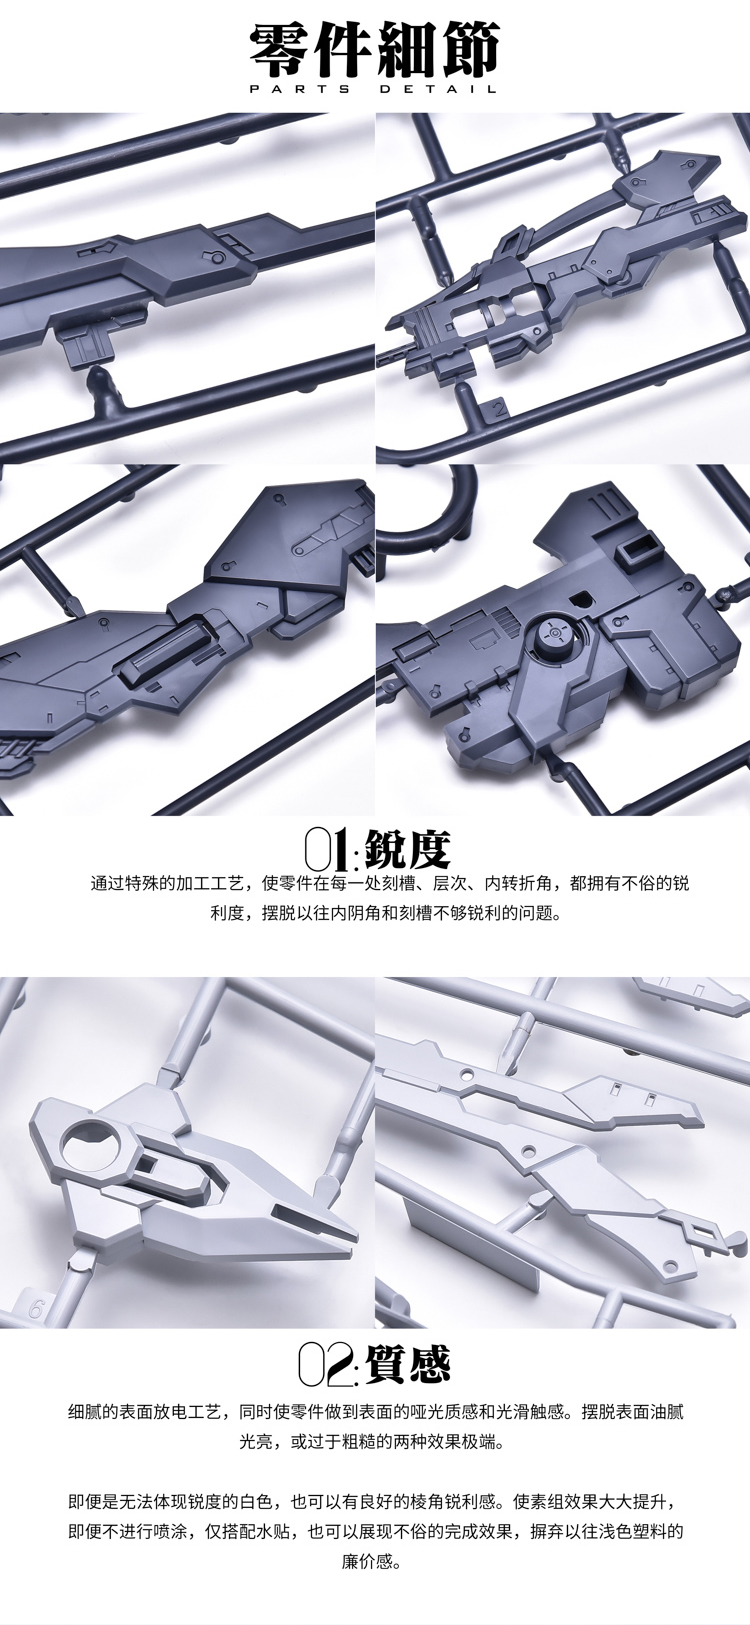 S642_yujiao_trident_weapon_011.jpg